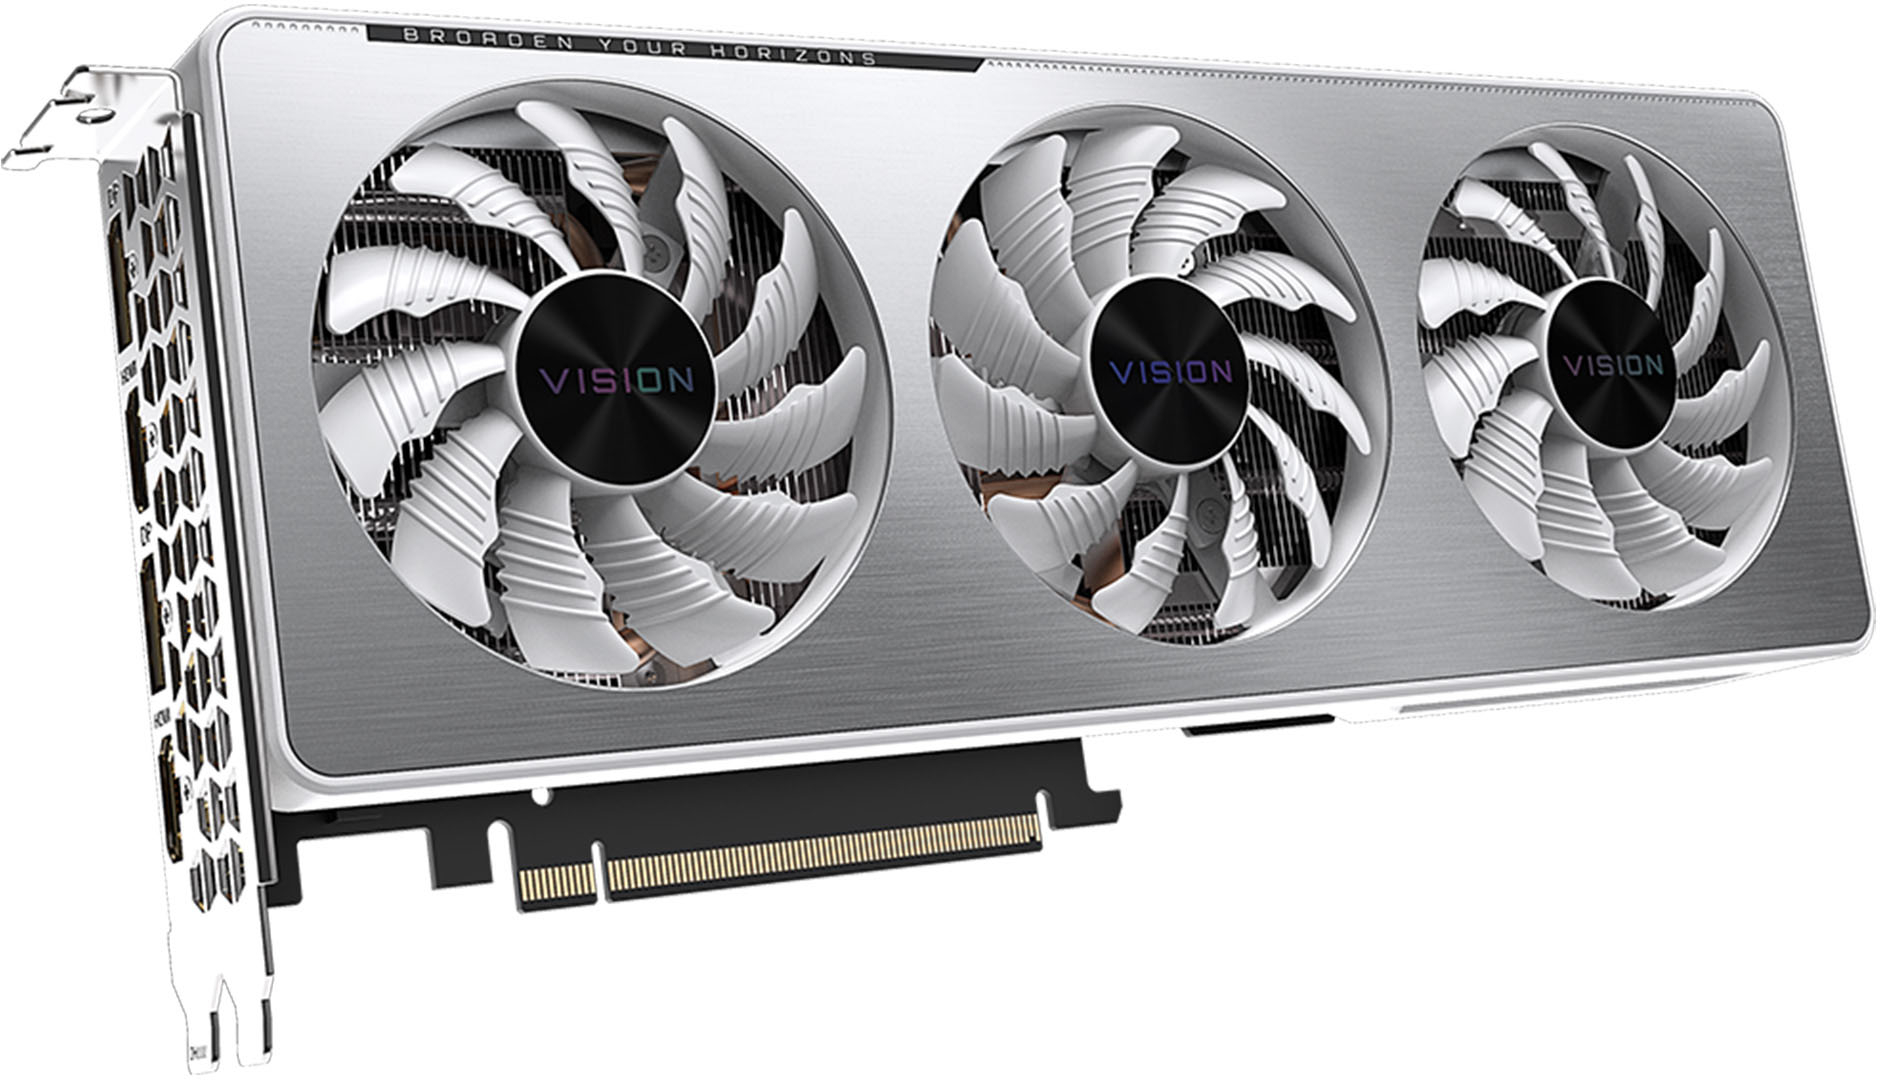 GIGABYTE NVIDIA GeForce RTX 3060 Ti VISION OC 8GB (rev2.0) GDDR6 